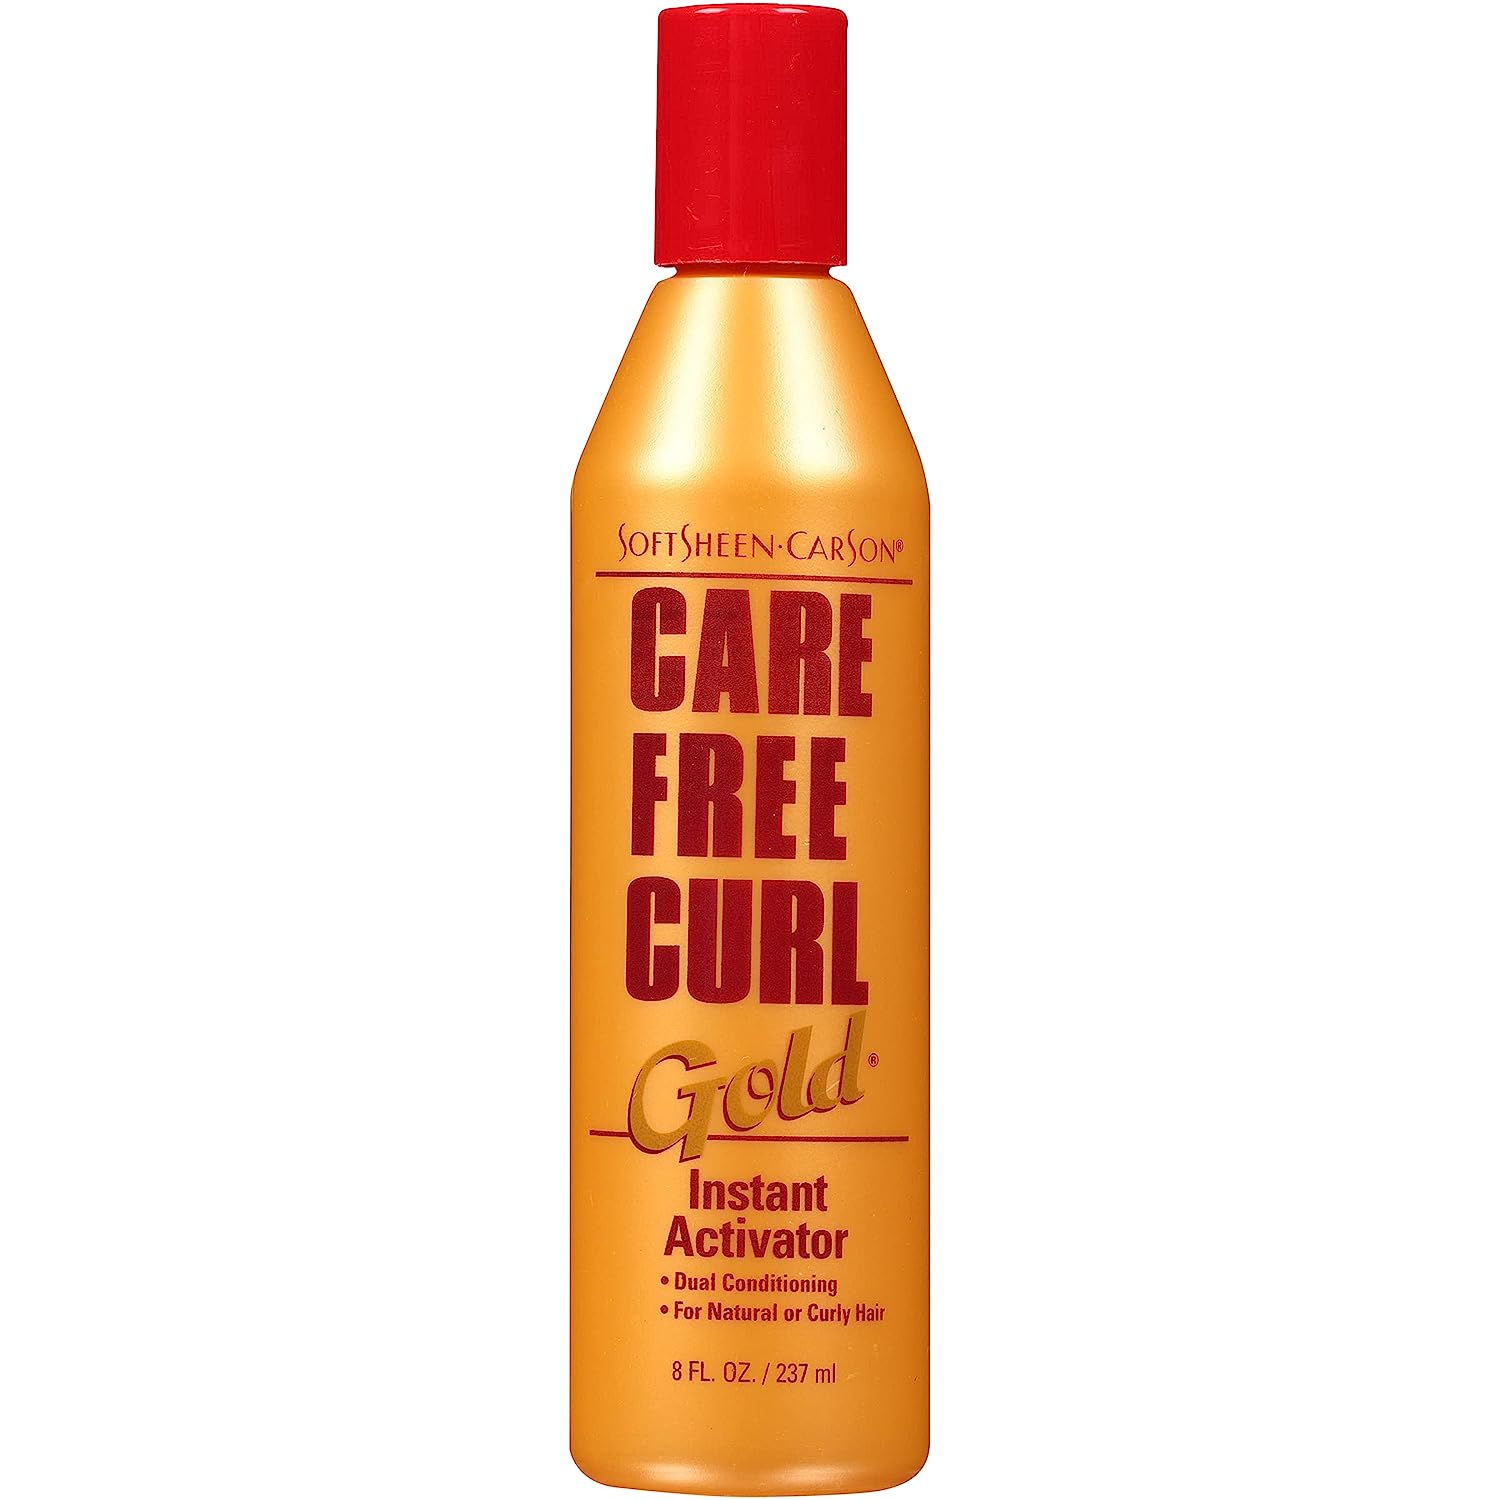 Soft-Sheen Carson Carefree Curl Gold Curl Enhancer Activator